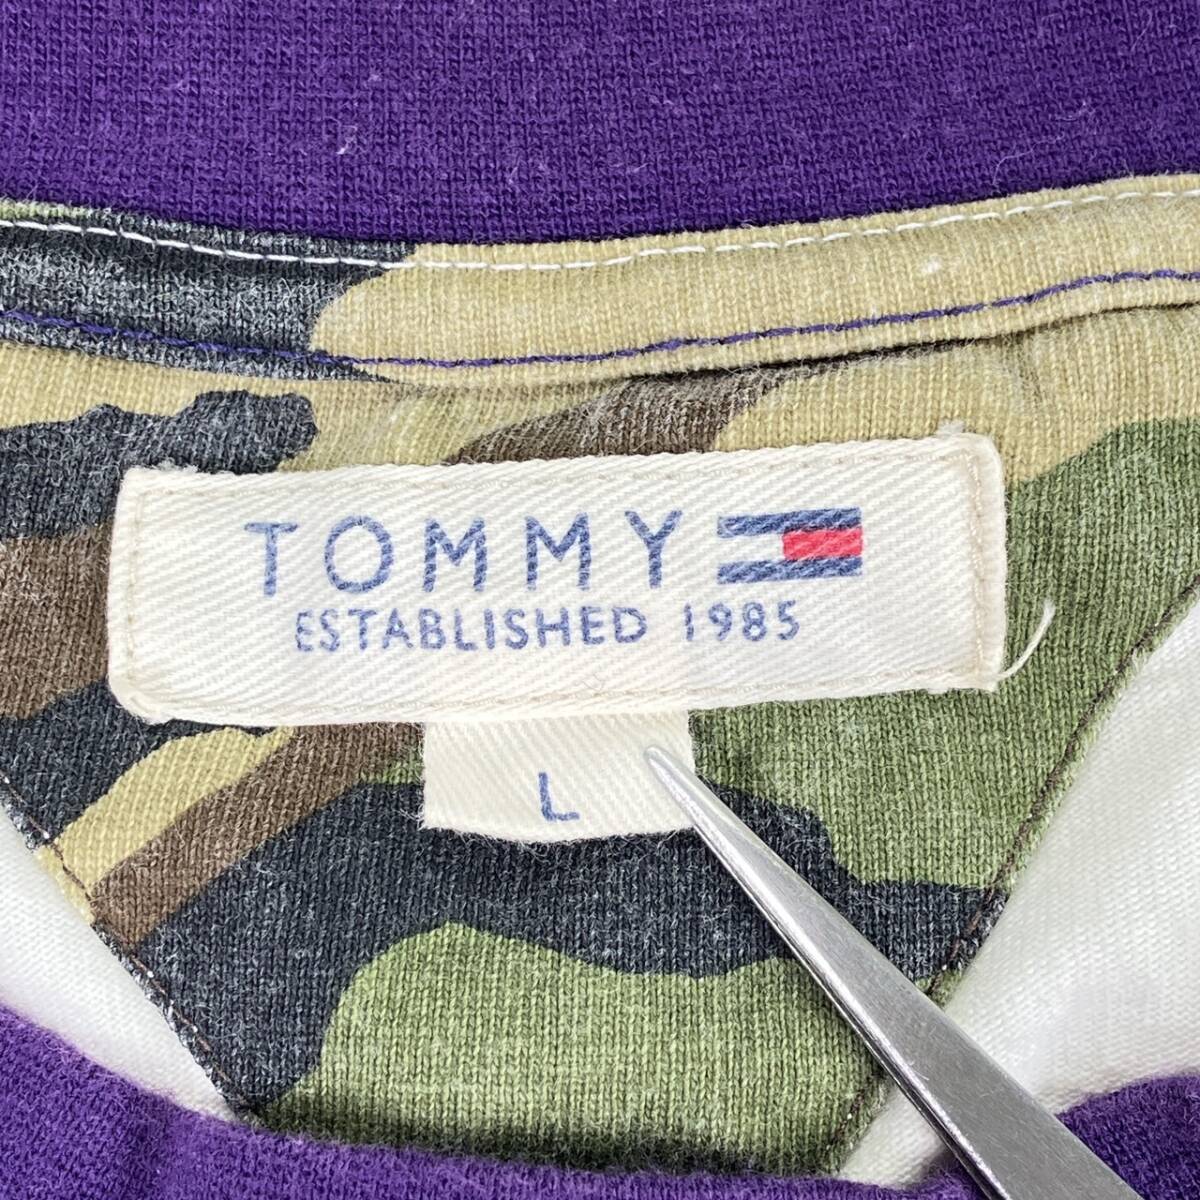 L TOMMY ESTABLISHED 1985 Tシャツ オフホワイト/白/ブラック/パープル/黒/紫 長袖 リユース ultraｍto ts2012の画像3